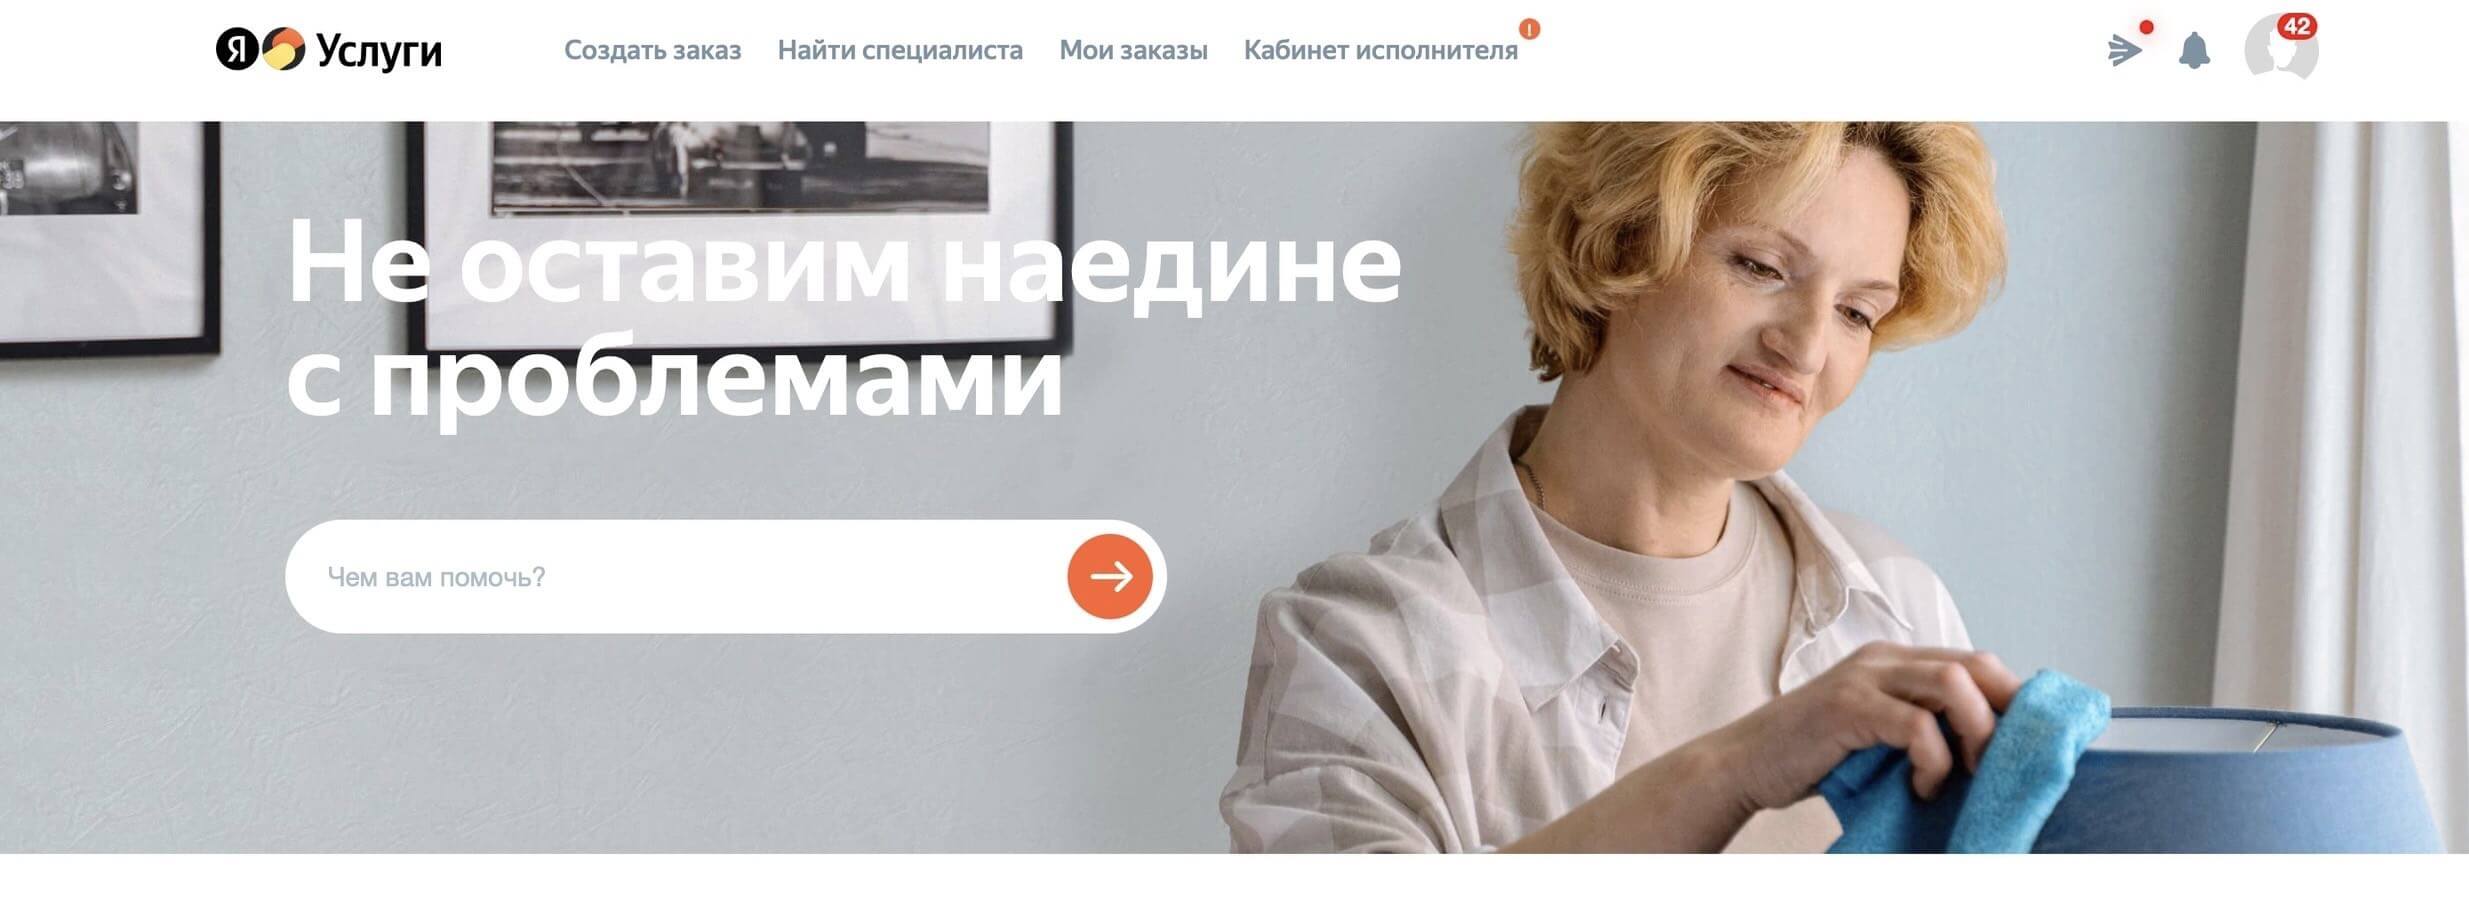  страница «Яндекс.Услуг»